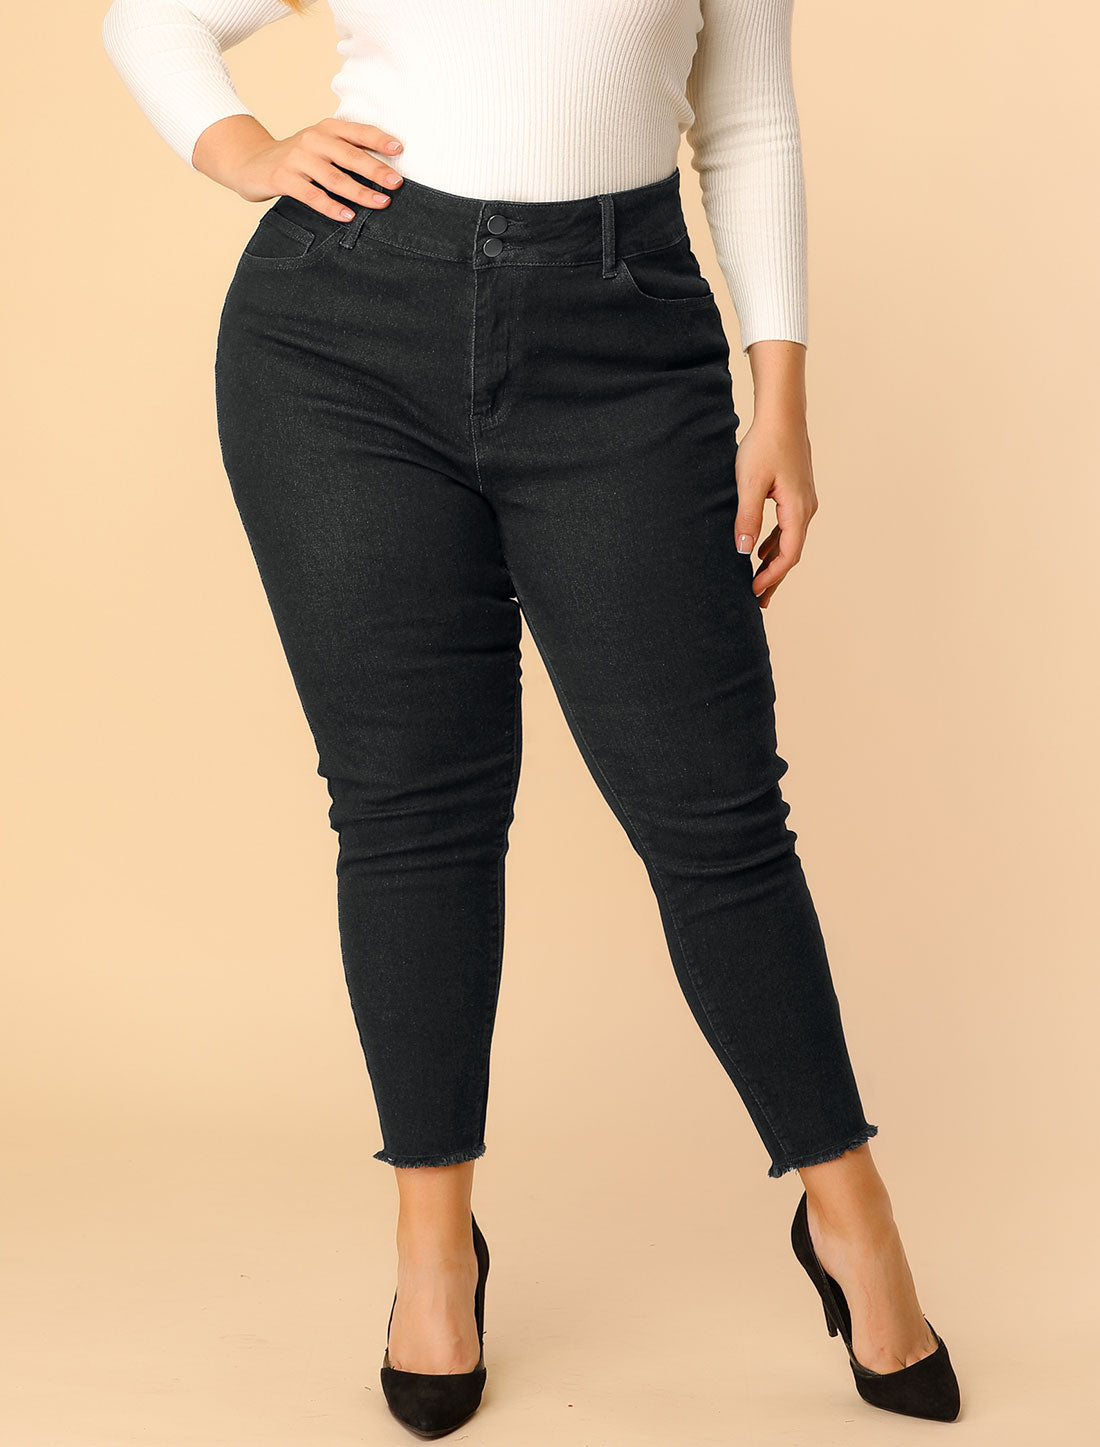 Agnes Orinda Women's Plus Size Denim Jeans Mid Rise Stretch Washed